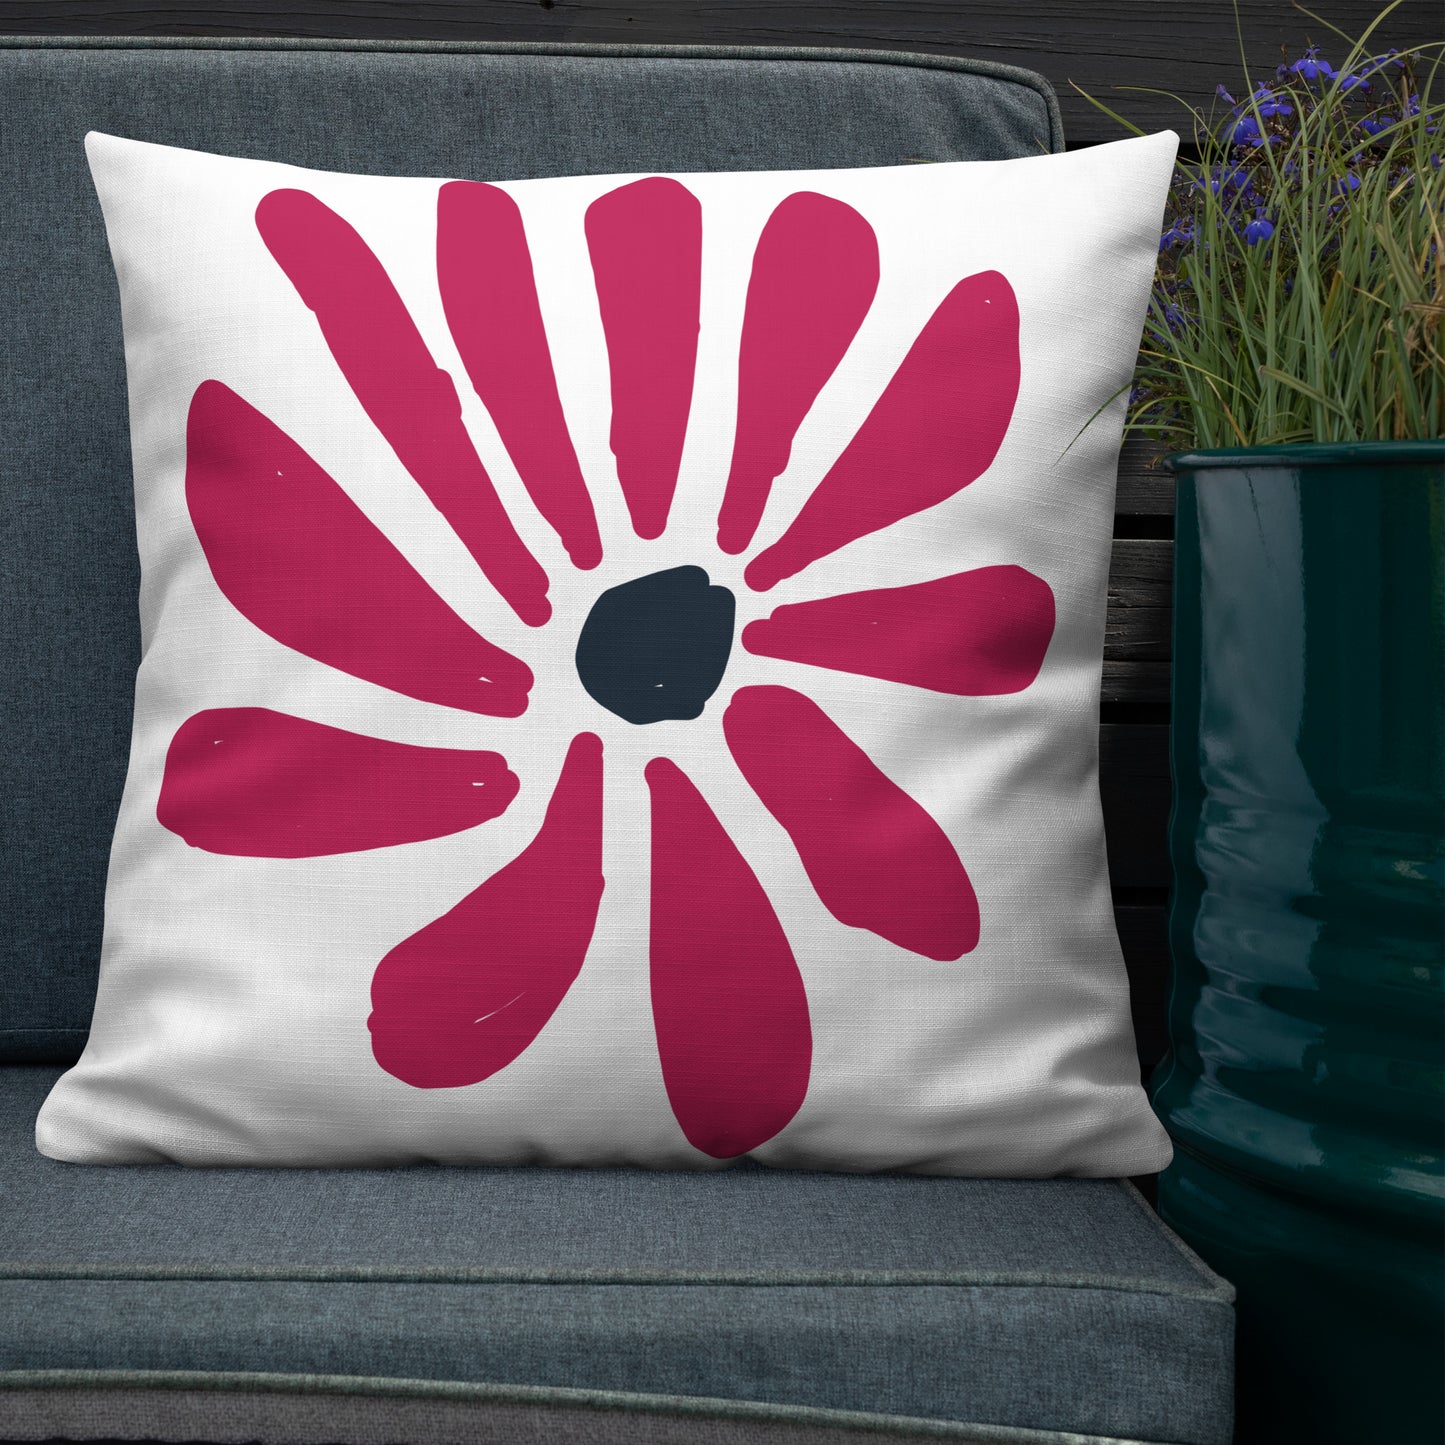 Abstract Flower Premium Pillow, designed by John Pierce